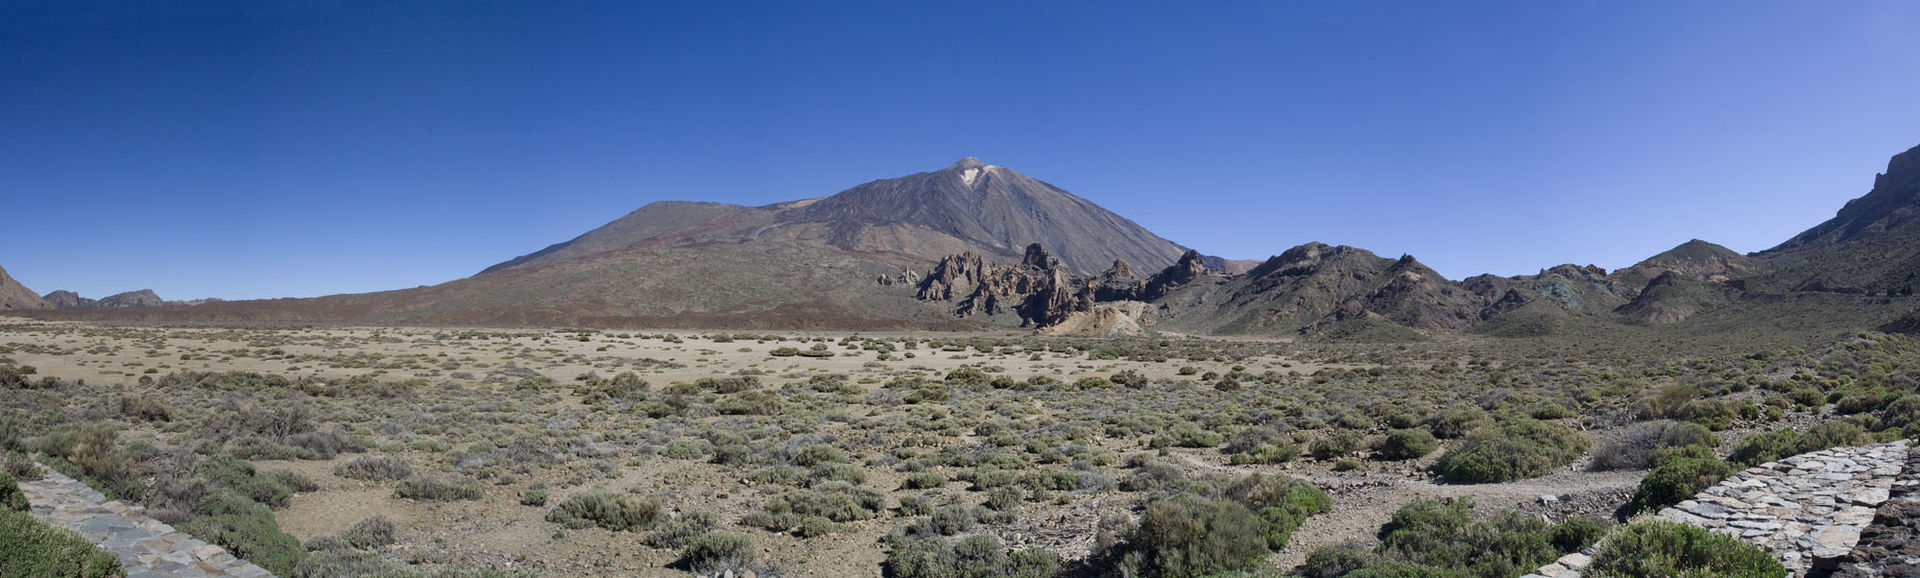 HIC154 IMG4 Teide panorama